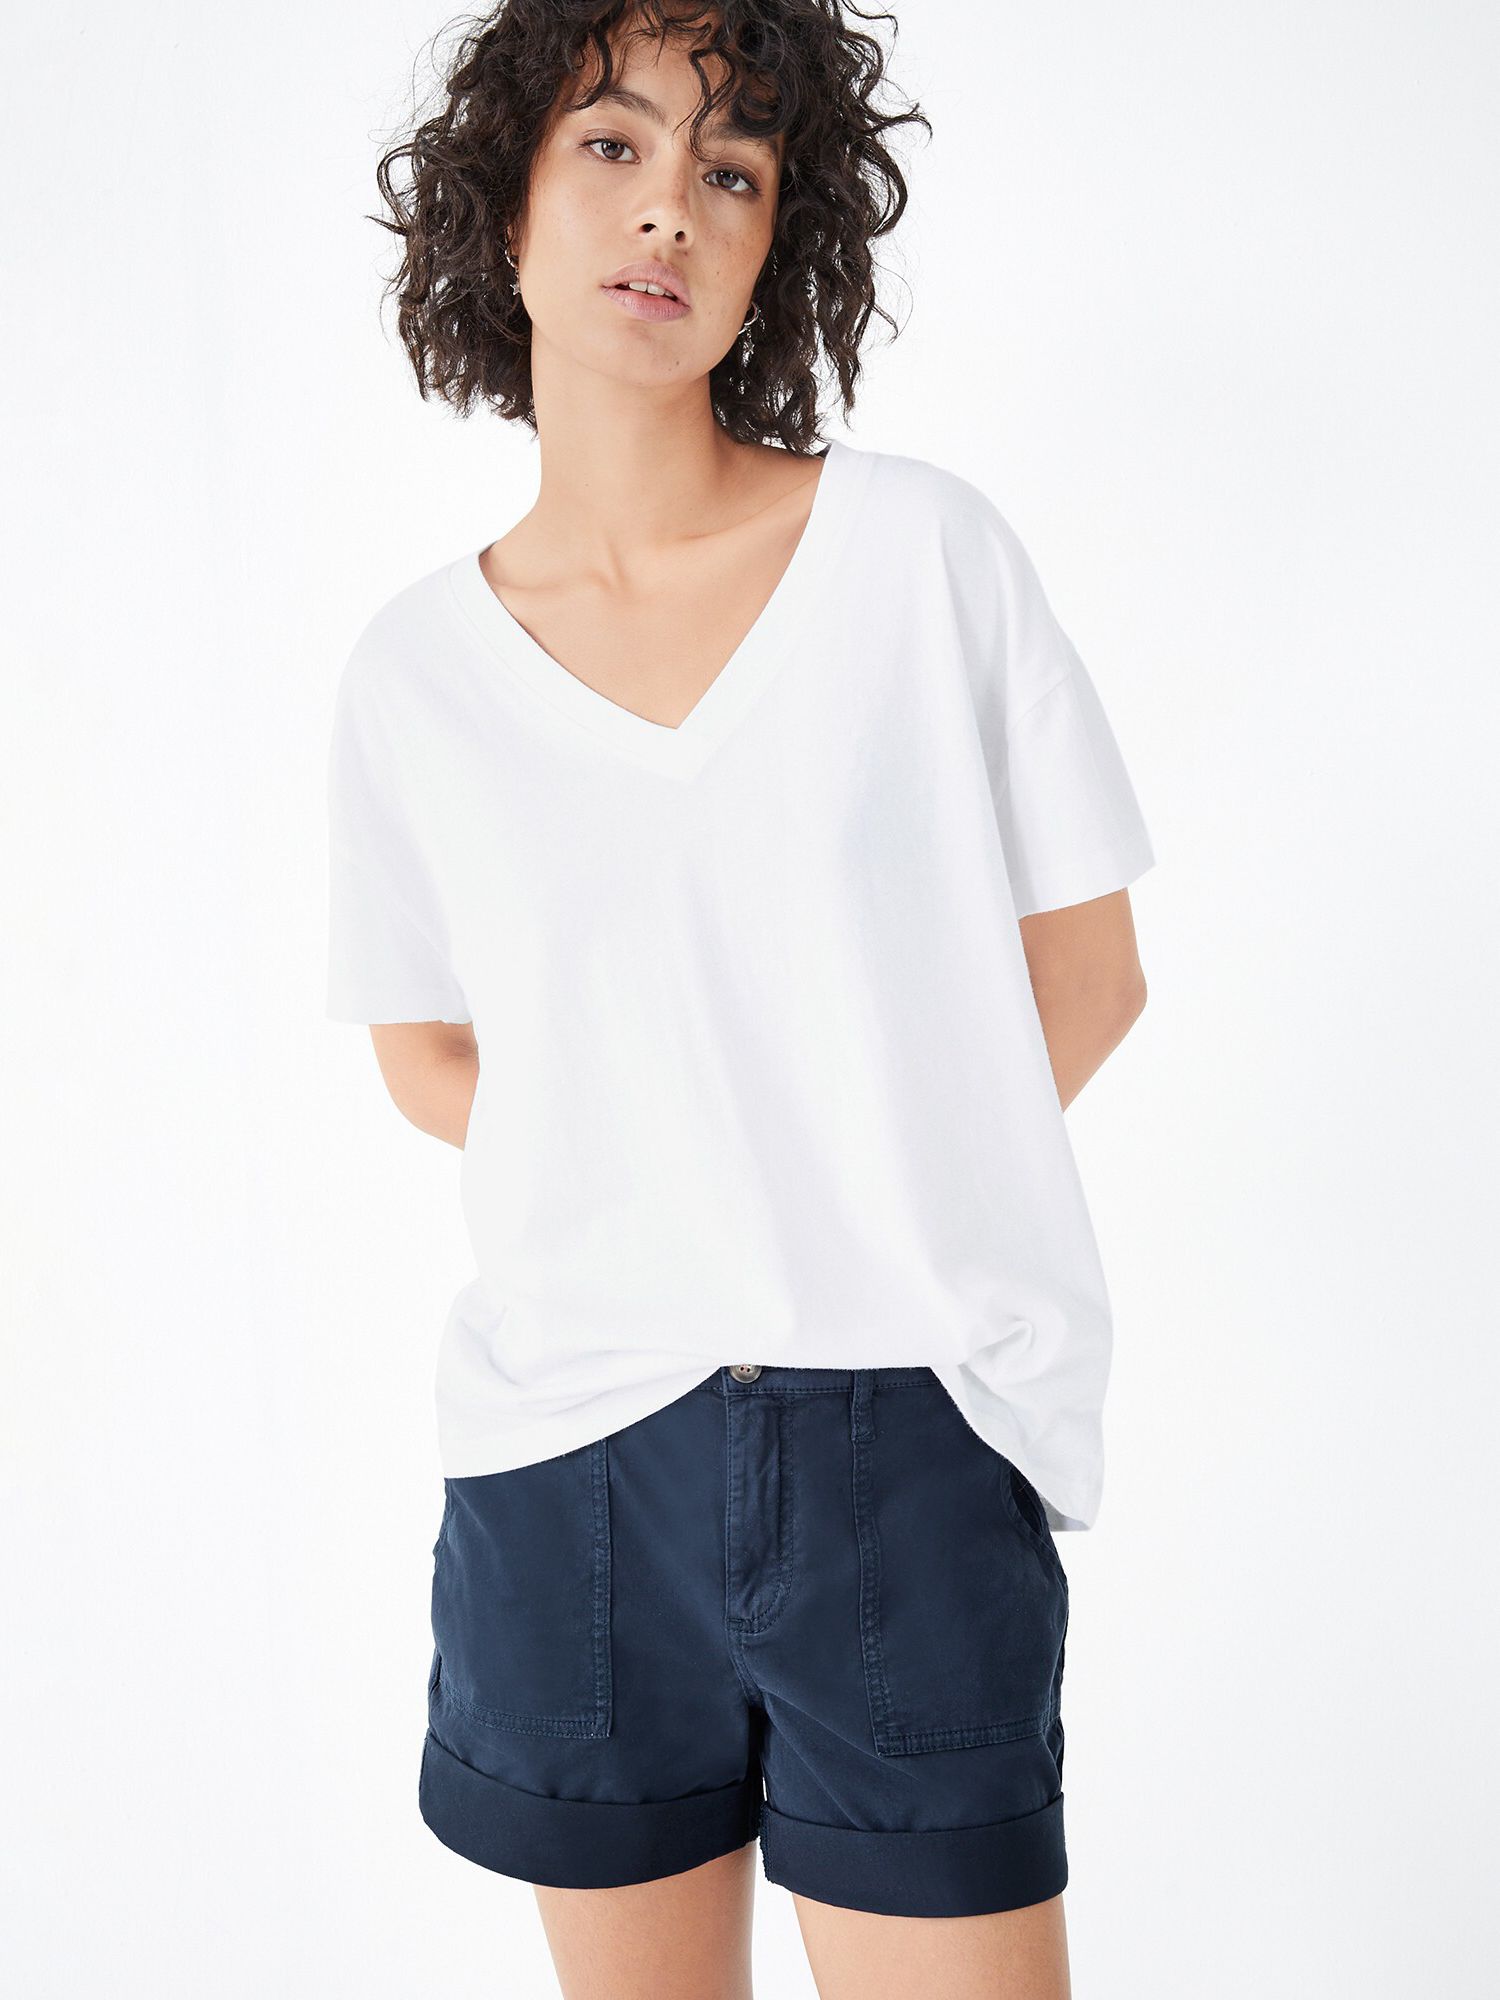 HUSH Plain Deep V-Neck Linen Blend T-Shirt, White, XXS